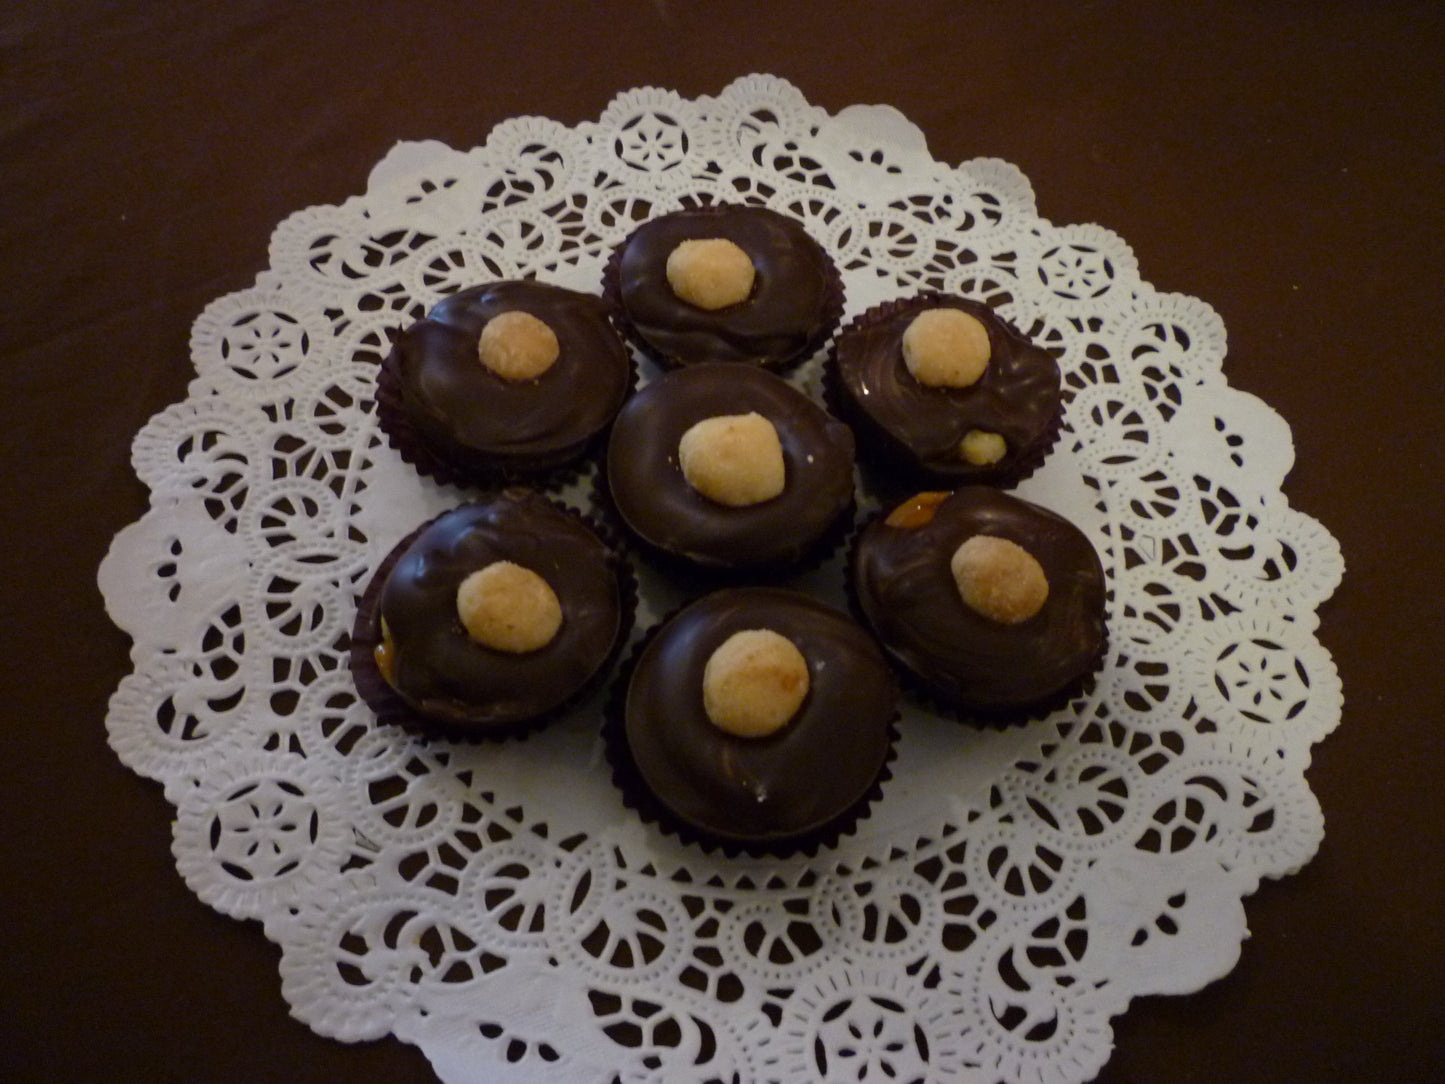 9 piece Chocolate Nut Clusters